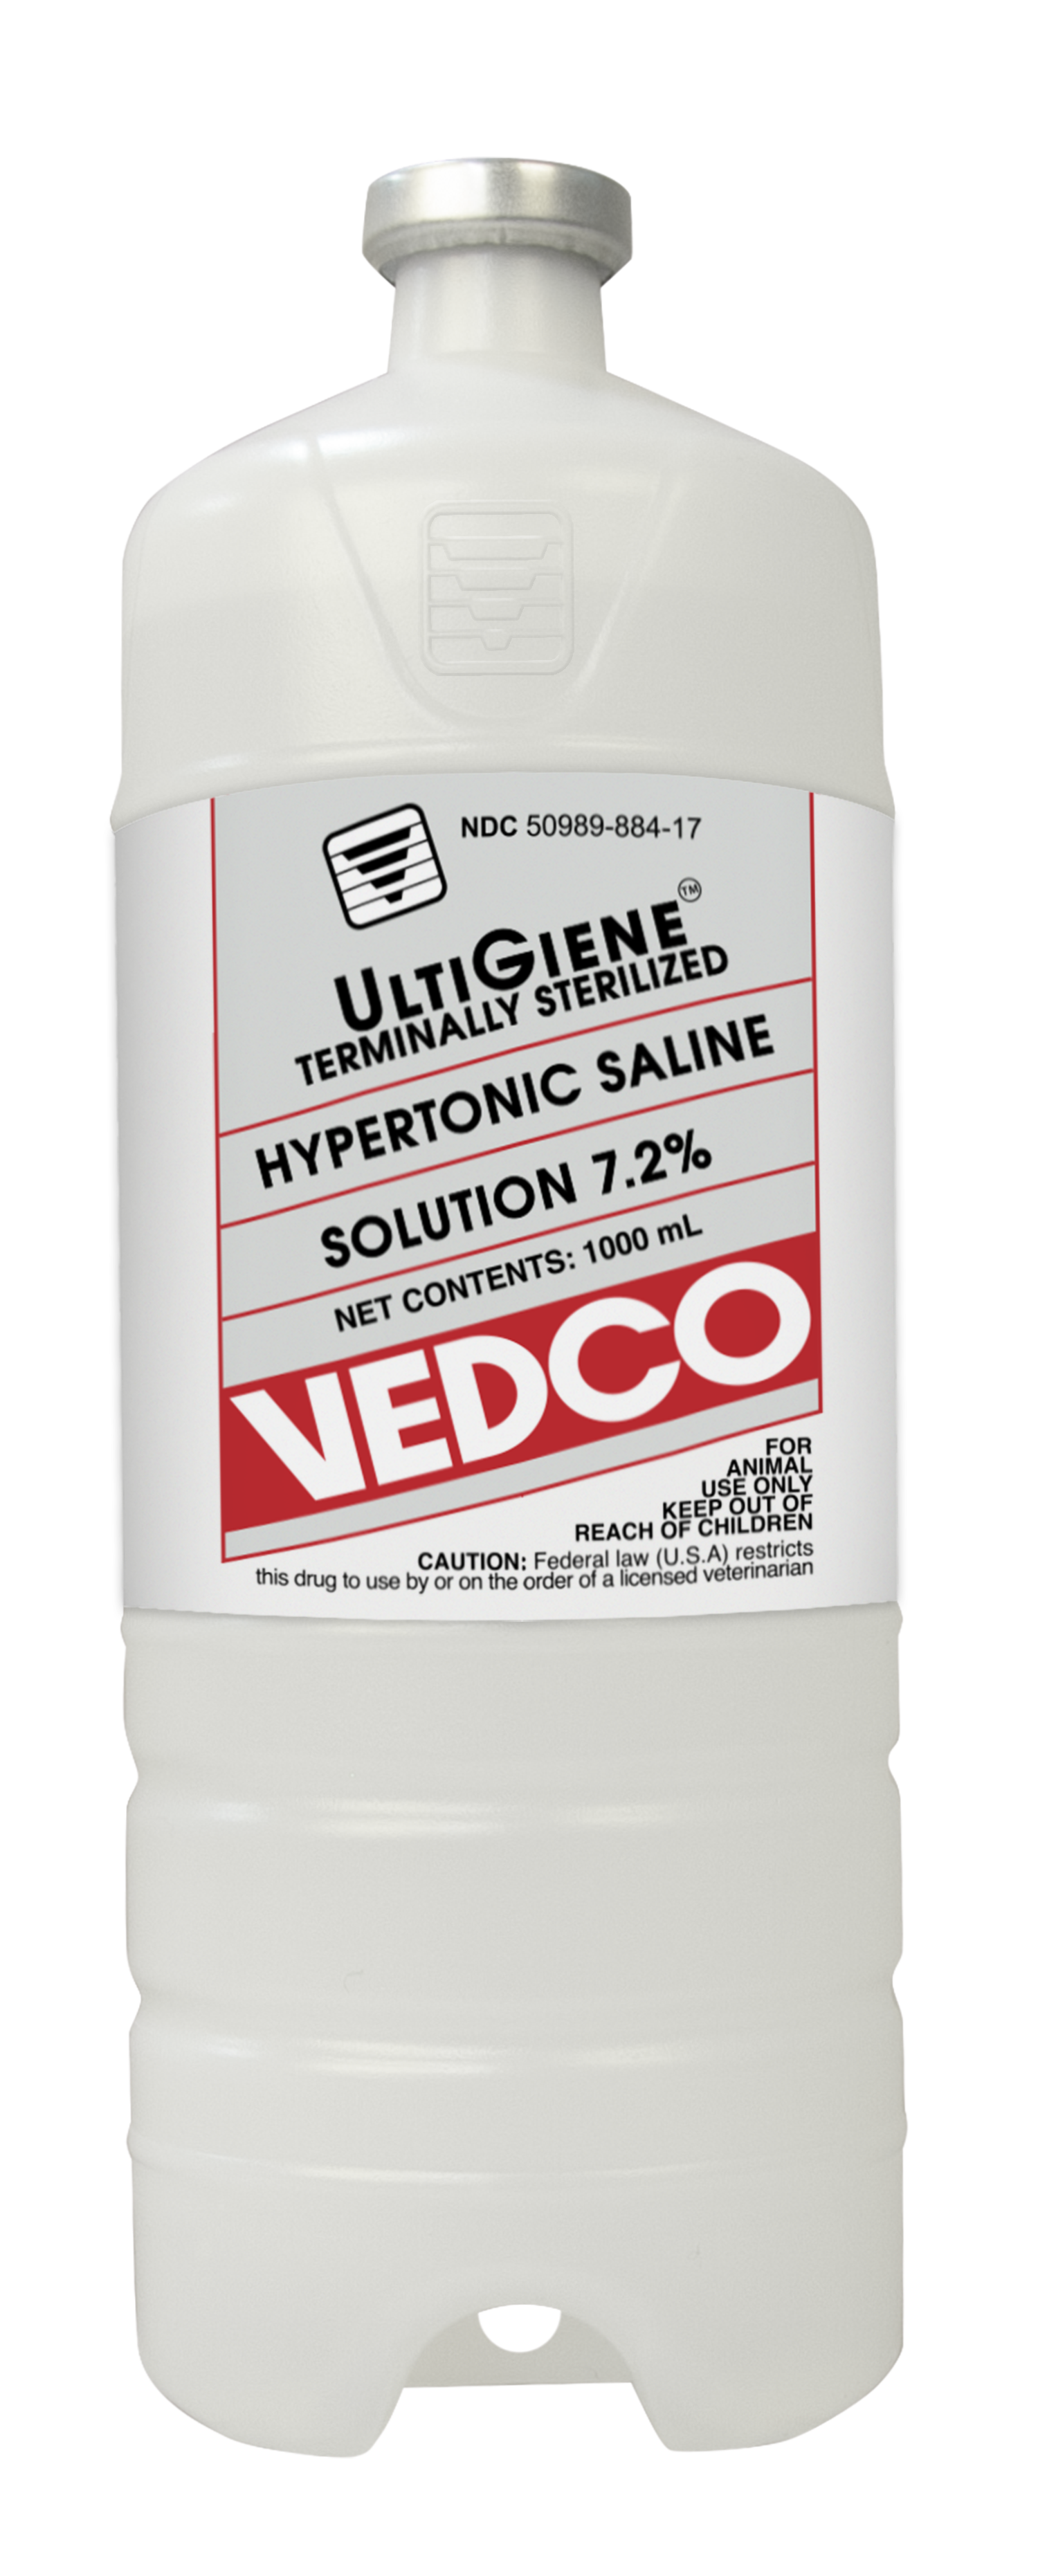 Vedco Inc. - HYPERTONIC SALINE SOLUTION 7.2%